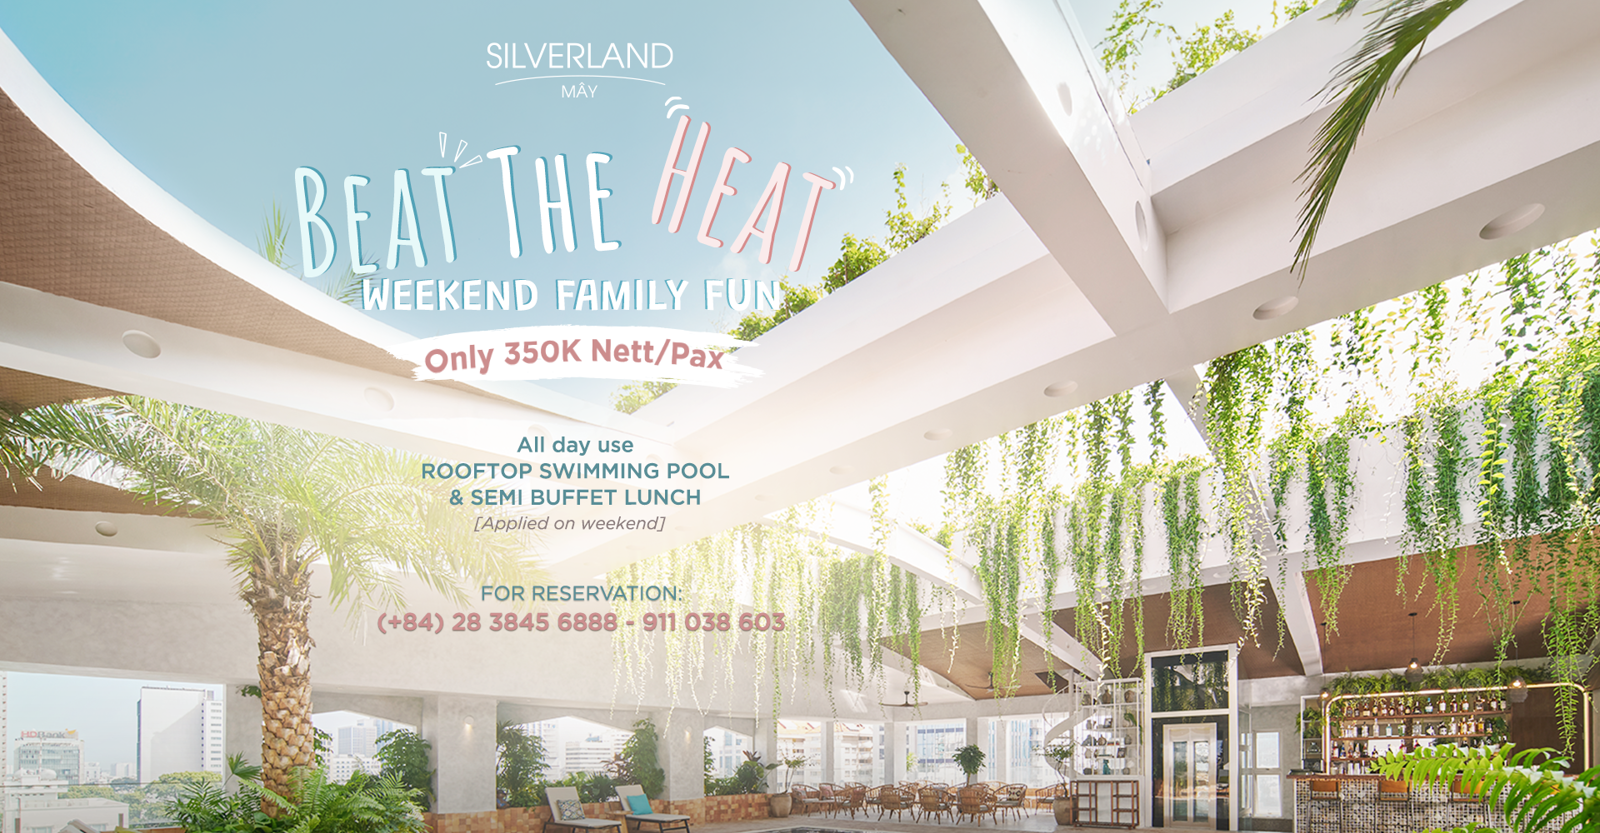 Silverland Mây – Beat The Heat, Weekend Family Fun | Every Sat & Sun